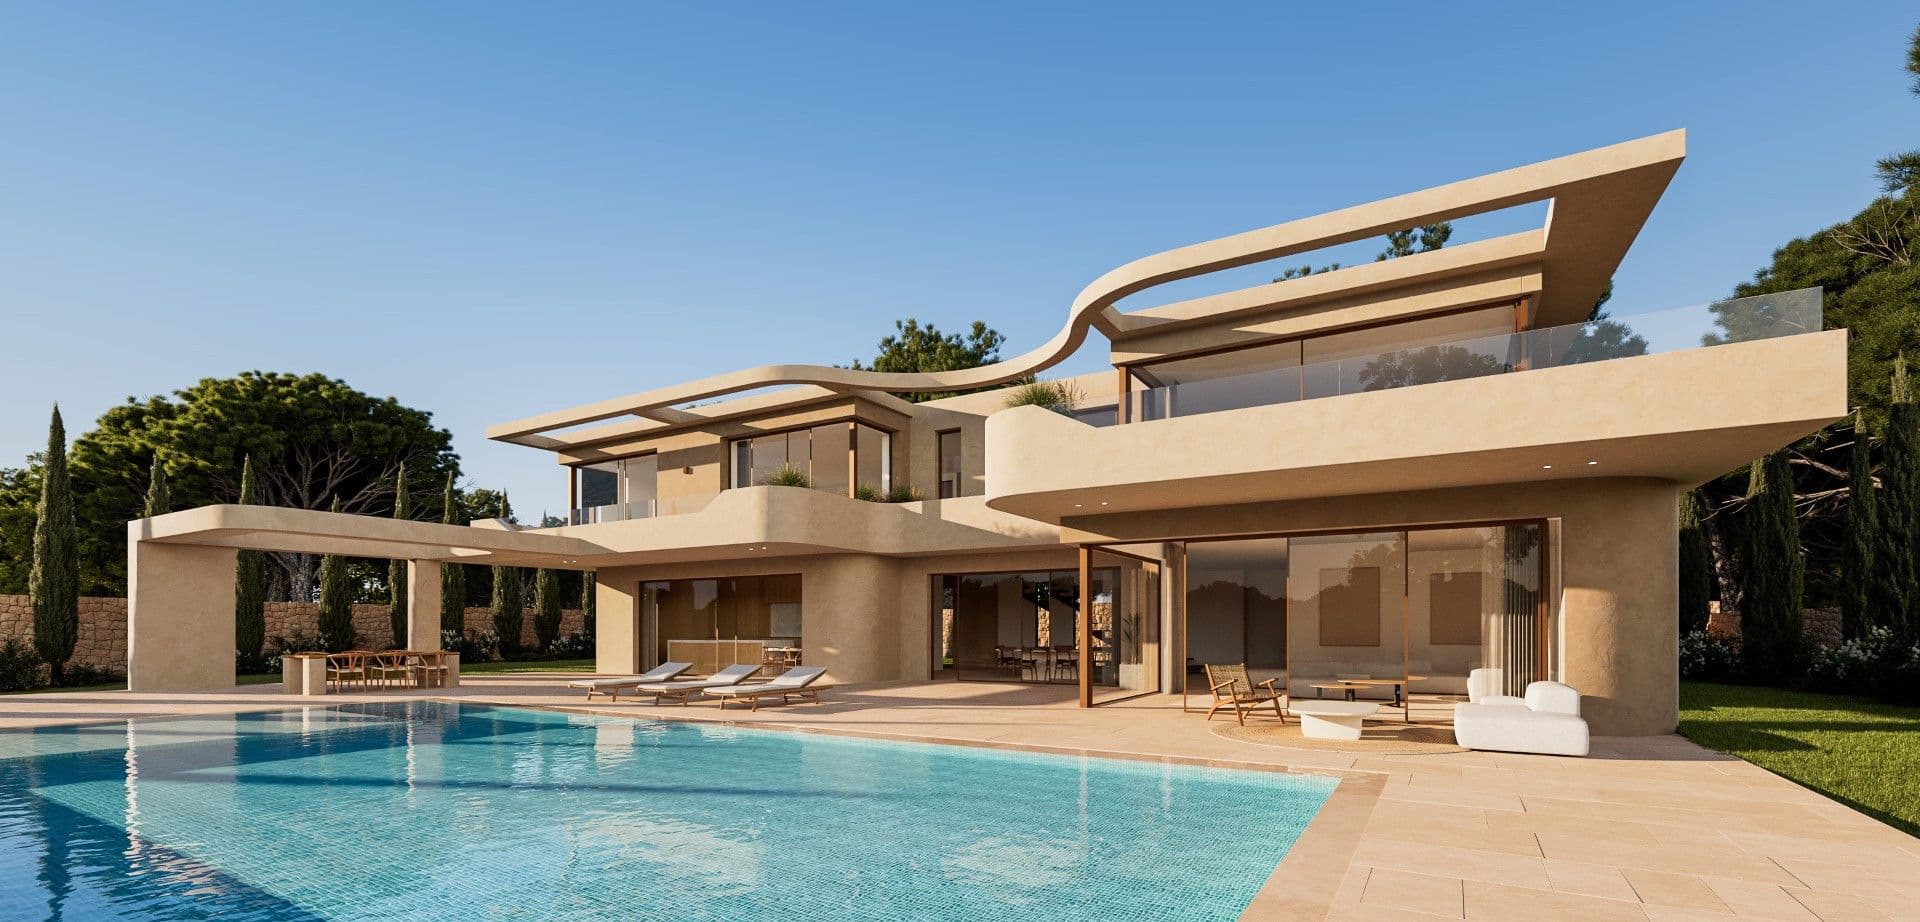 Exclusive villa project with panoramic sea views in Ambolo, Jávea (Alicante)